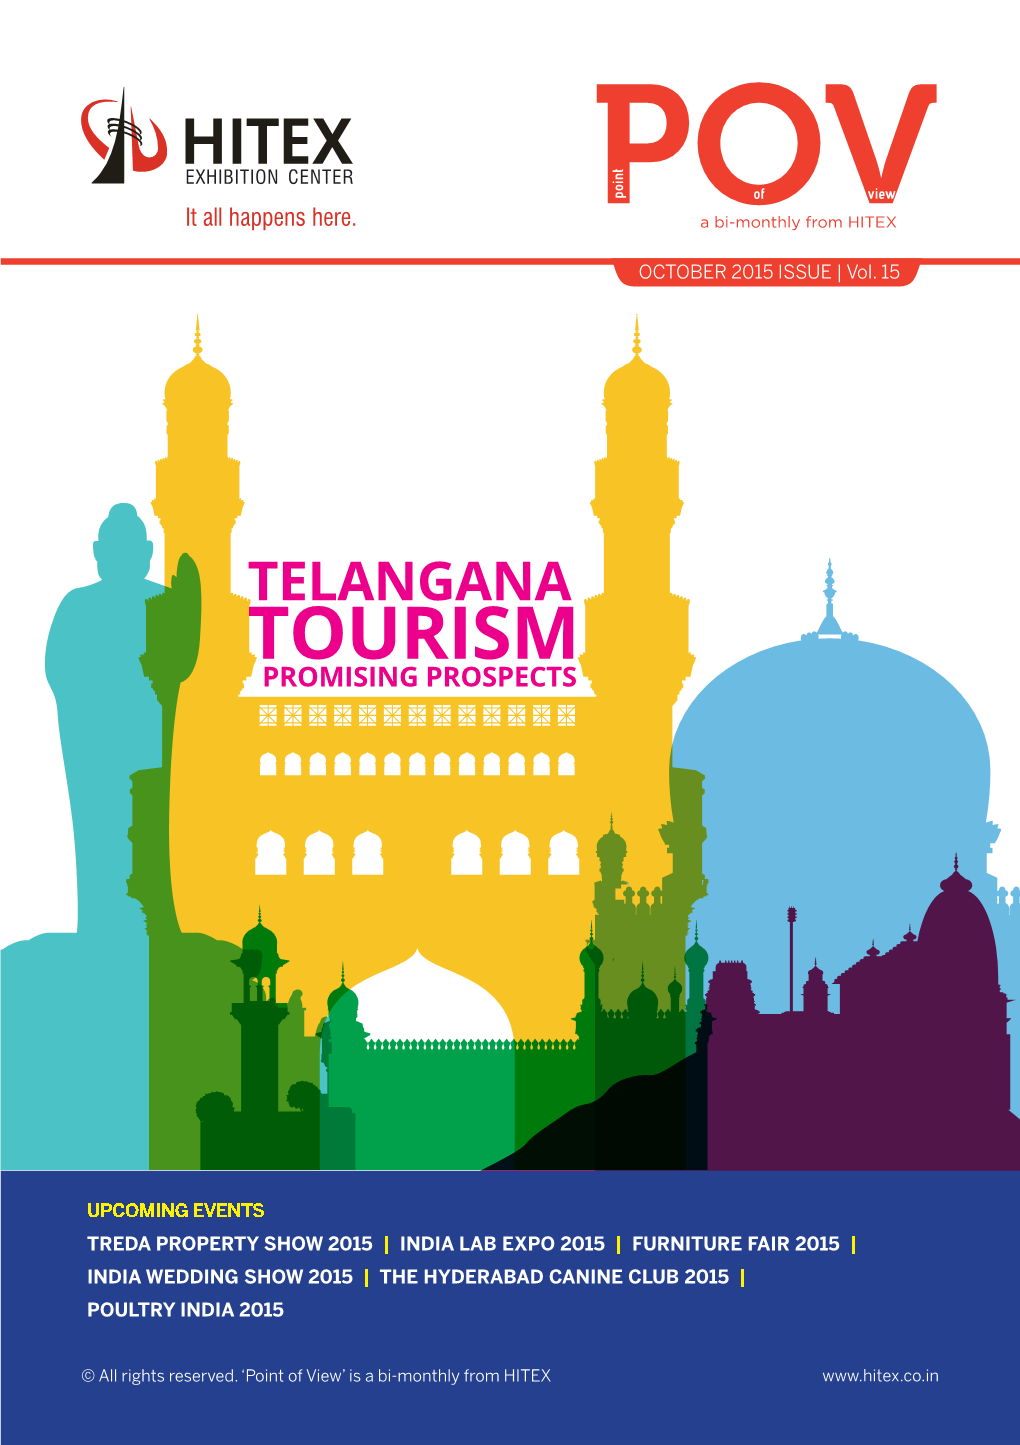 Telangana Tourism Promising Prospects